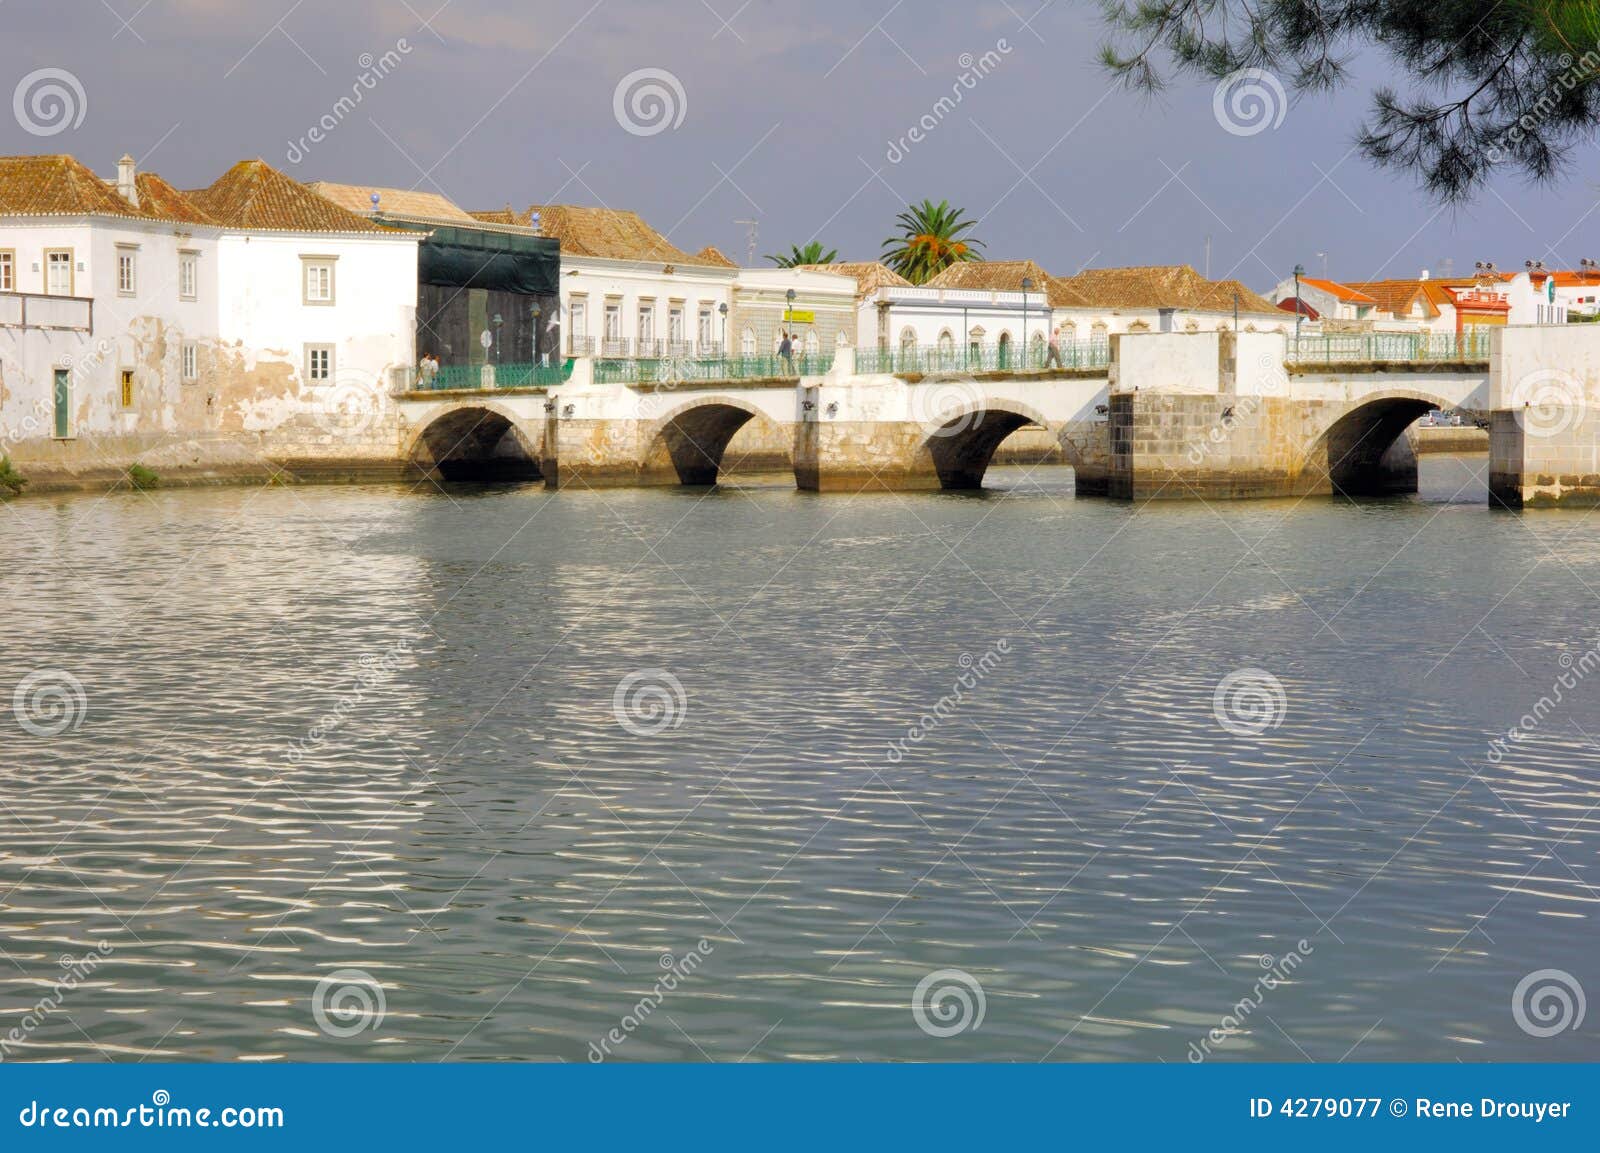 portugal, area of algarve, tavira: city view